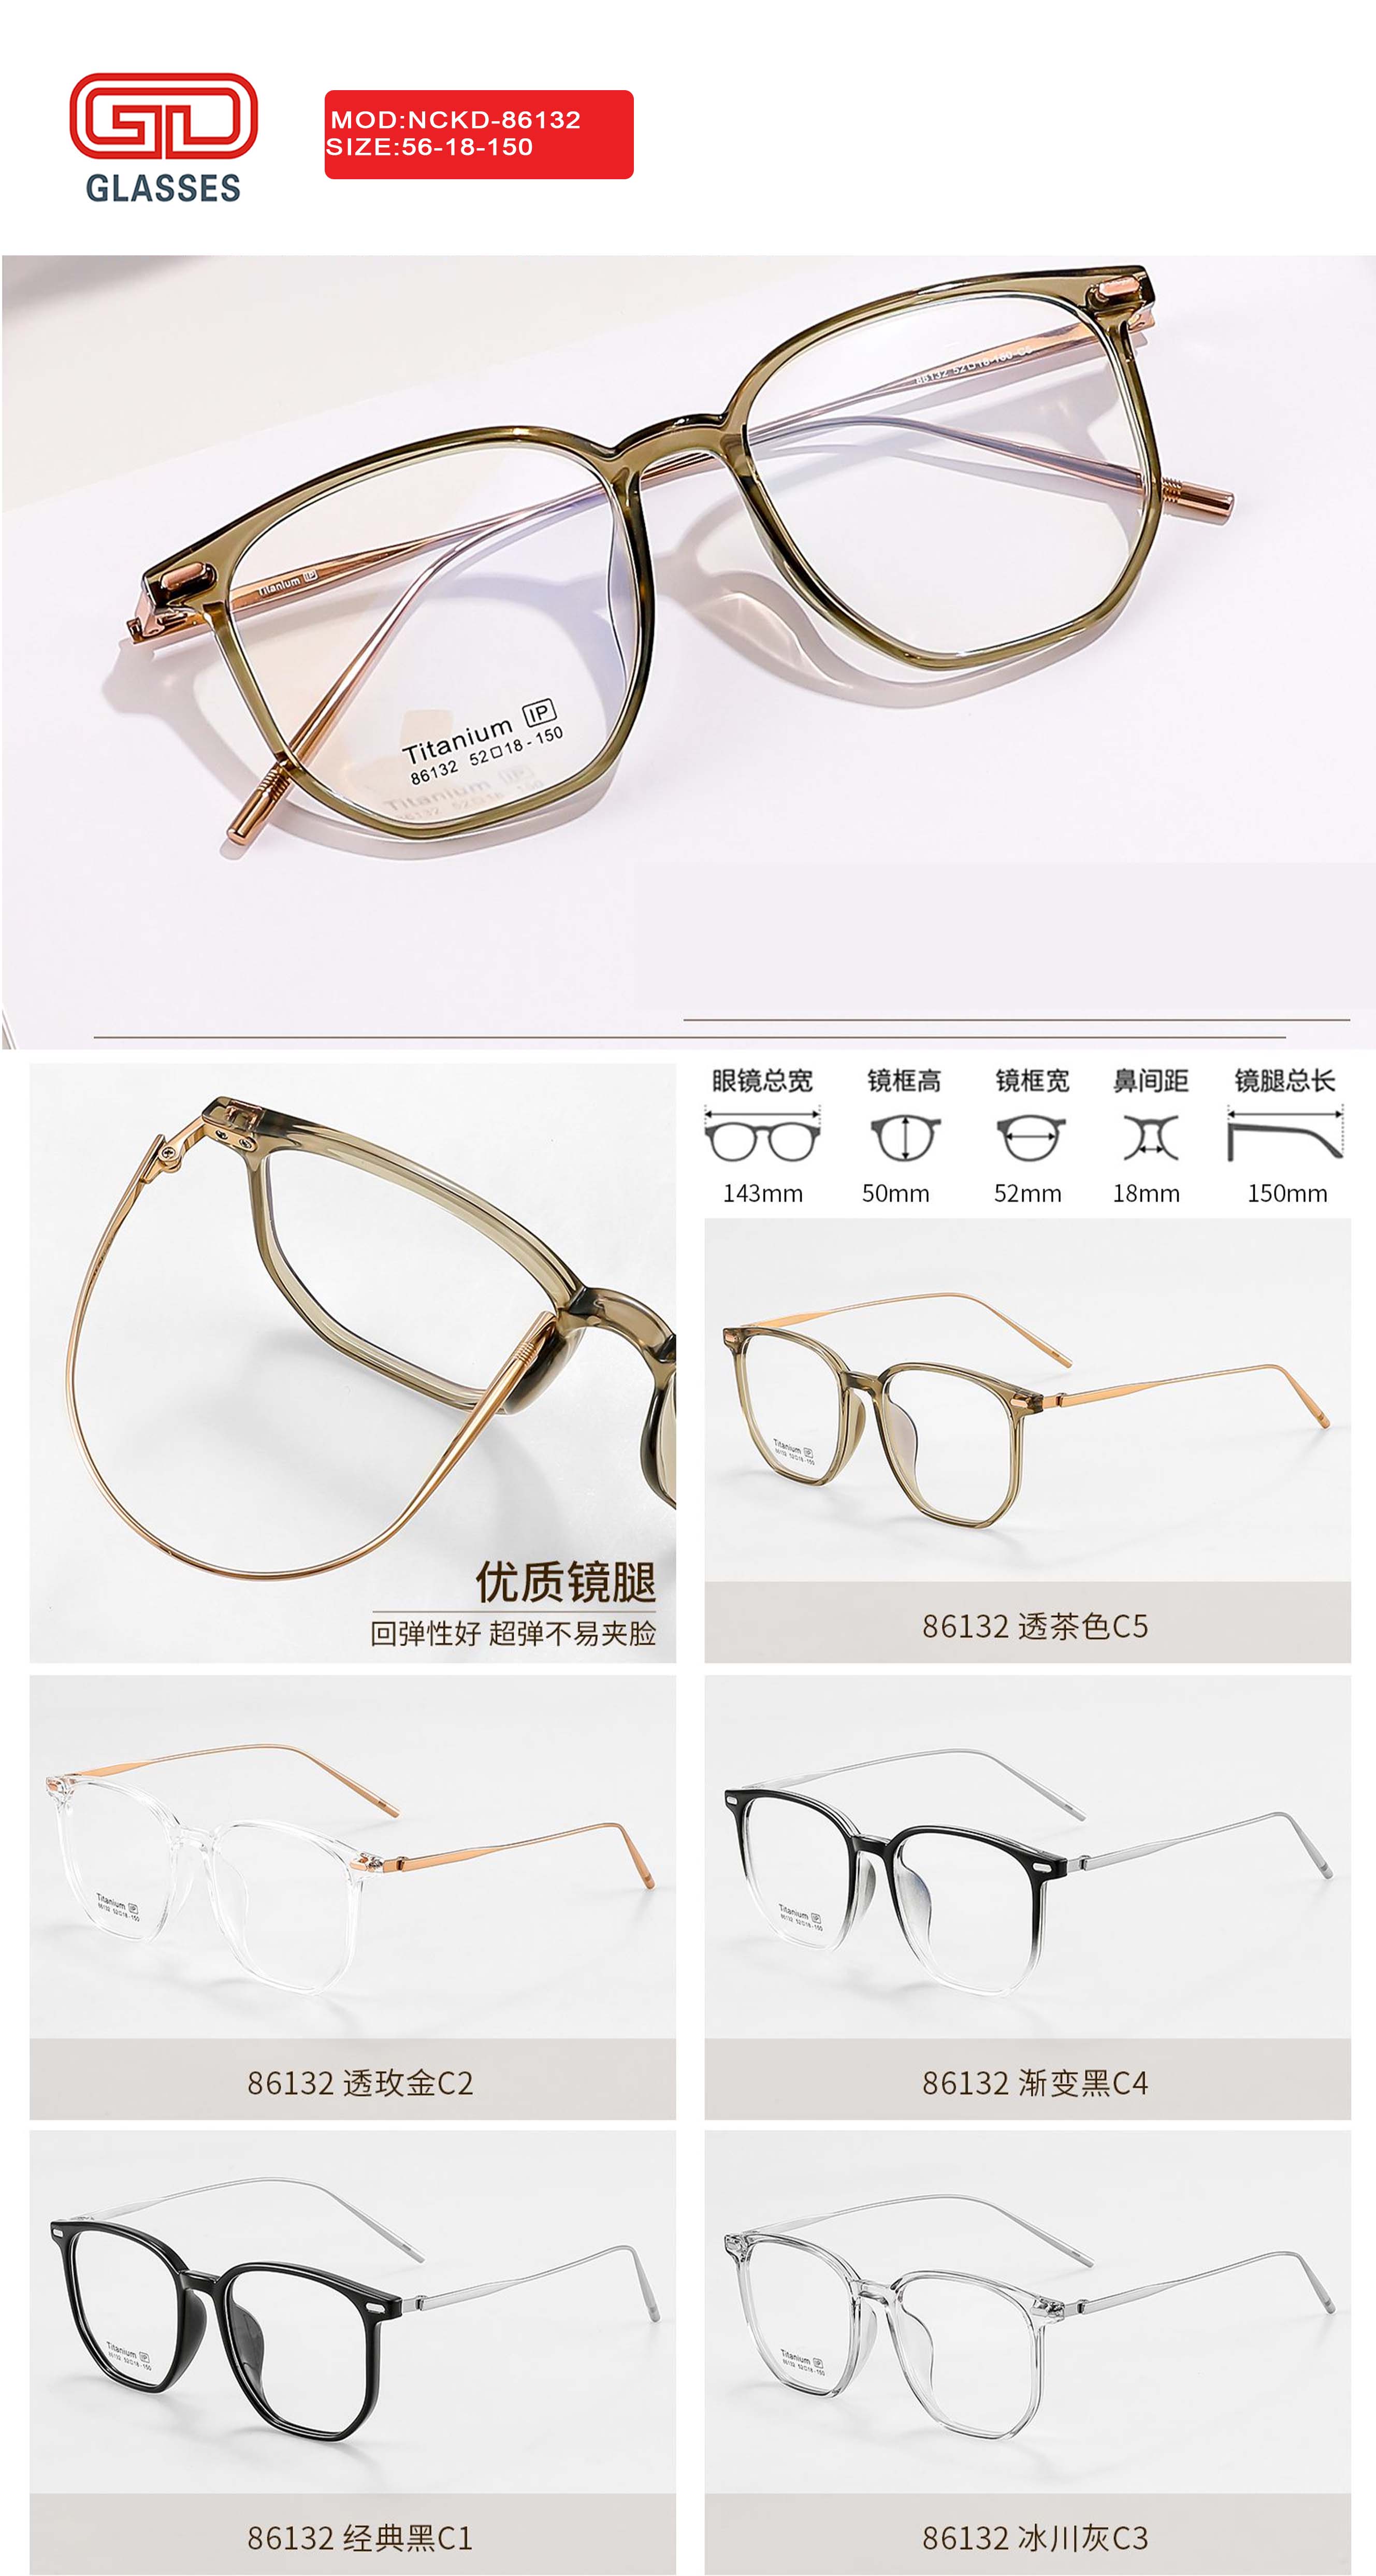 Ultralight Titanium Eyewear A Revolutionary New Launch by NC Glasses